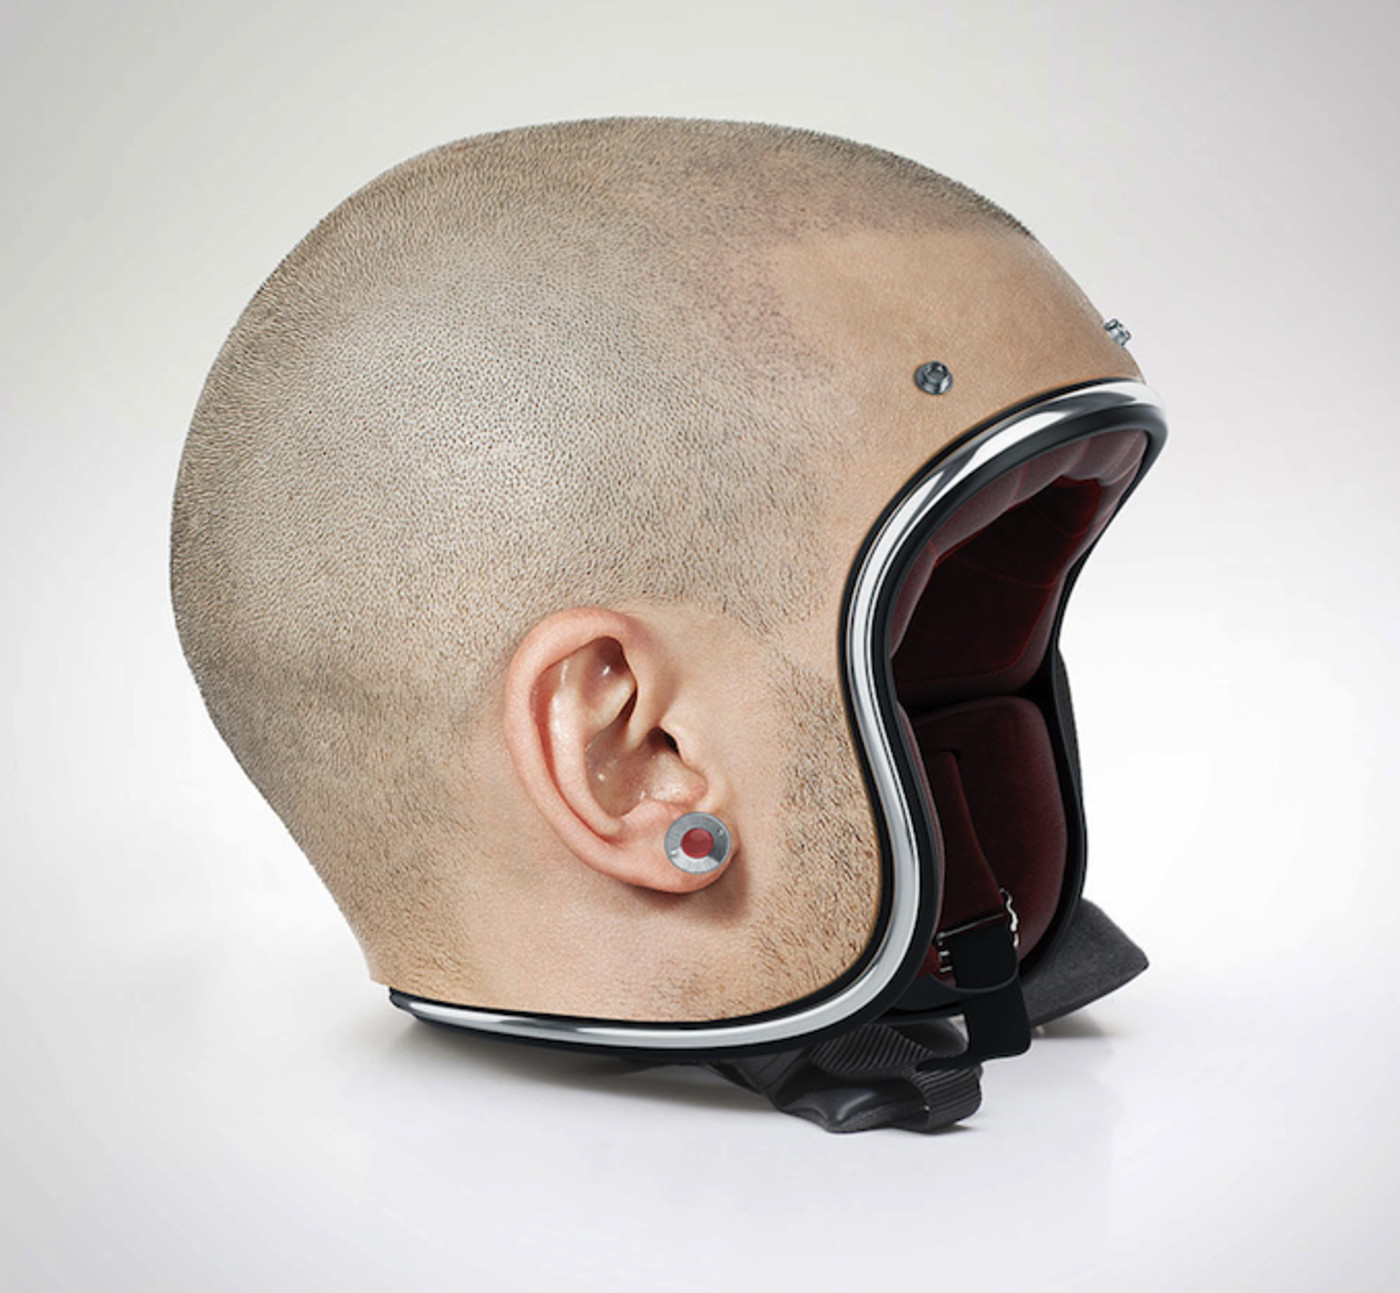 Sensational Photos Of motorcycle helmet looks like hat Images | Cross ...